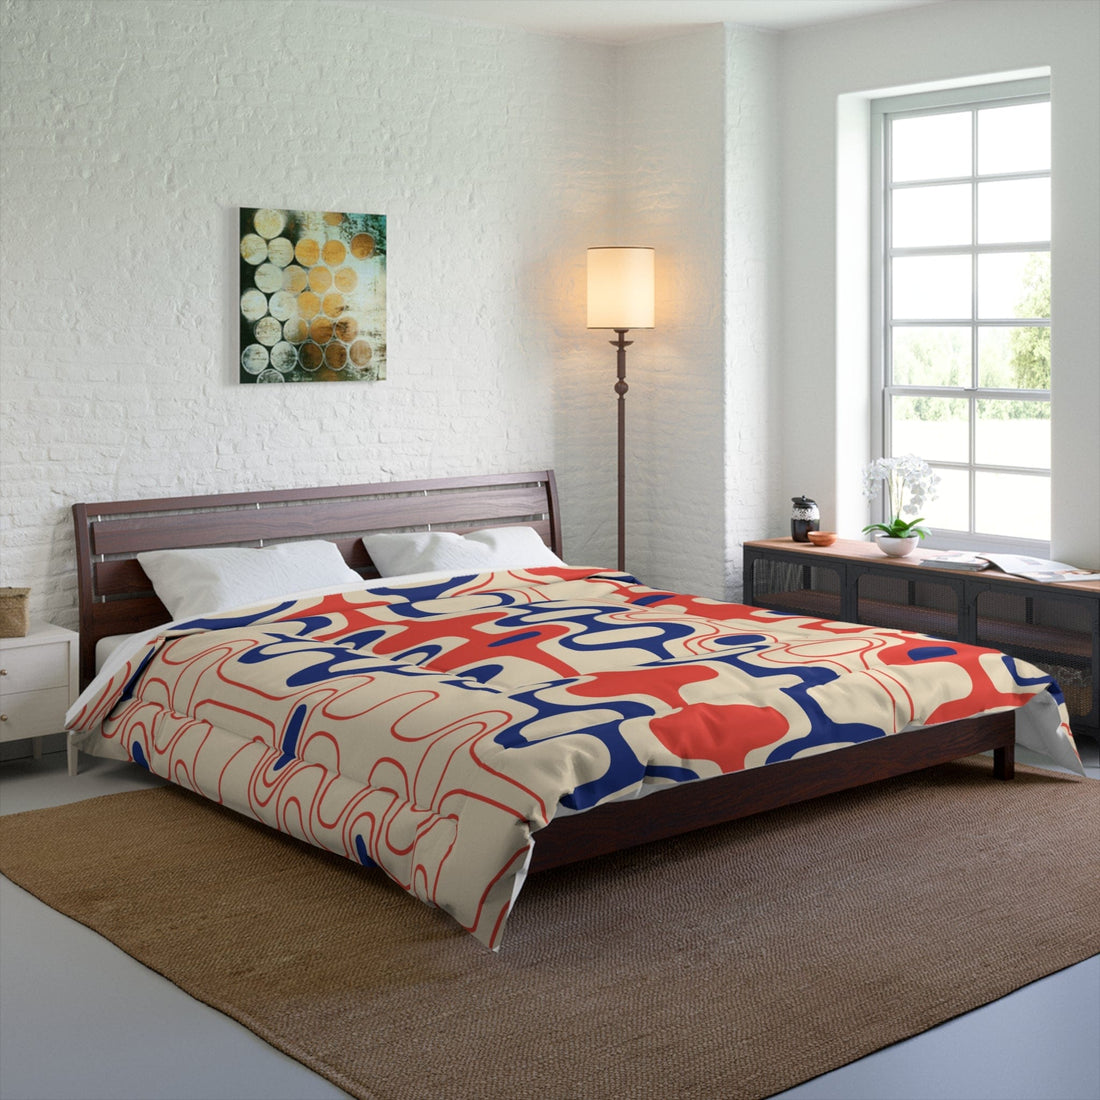 Kate McEnroe New York Retro Geometric Mid Mod Comforter Comforters 104&quot; × 88&quot; 46025880596819026813